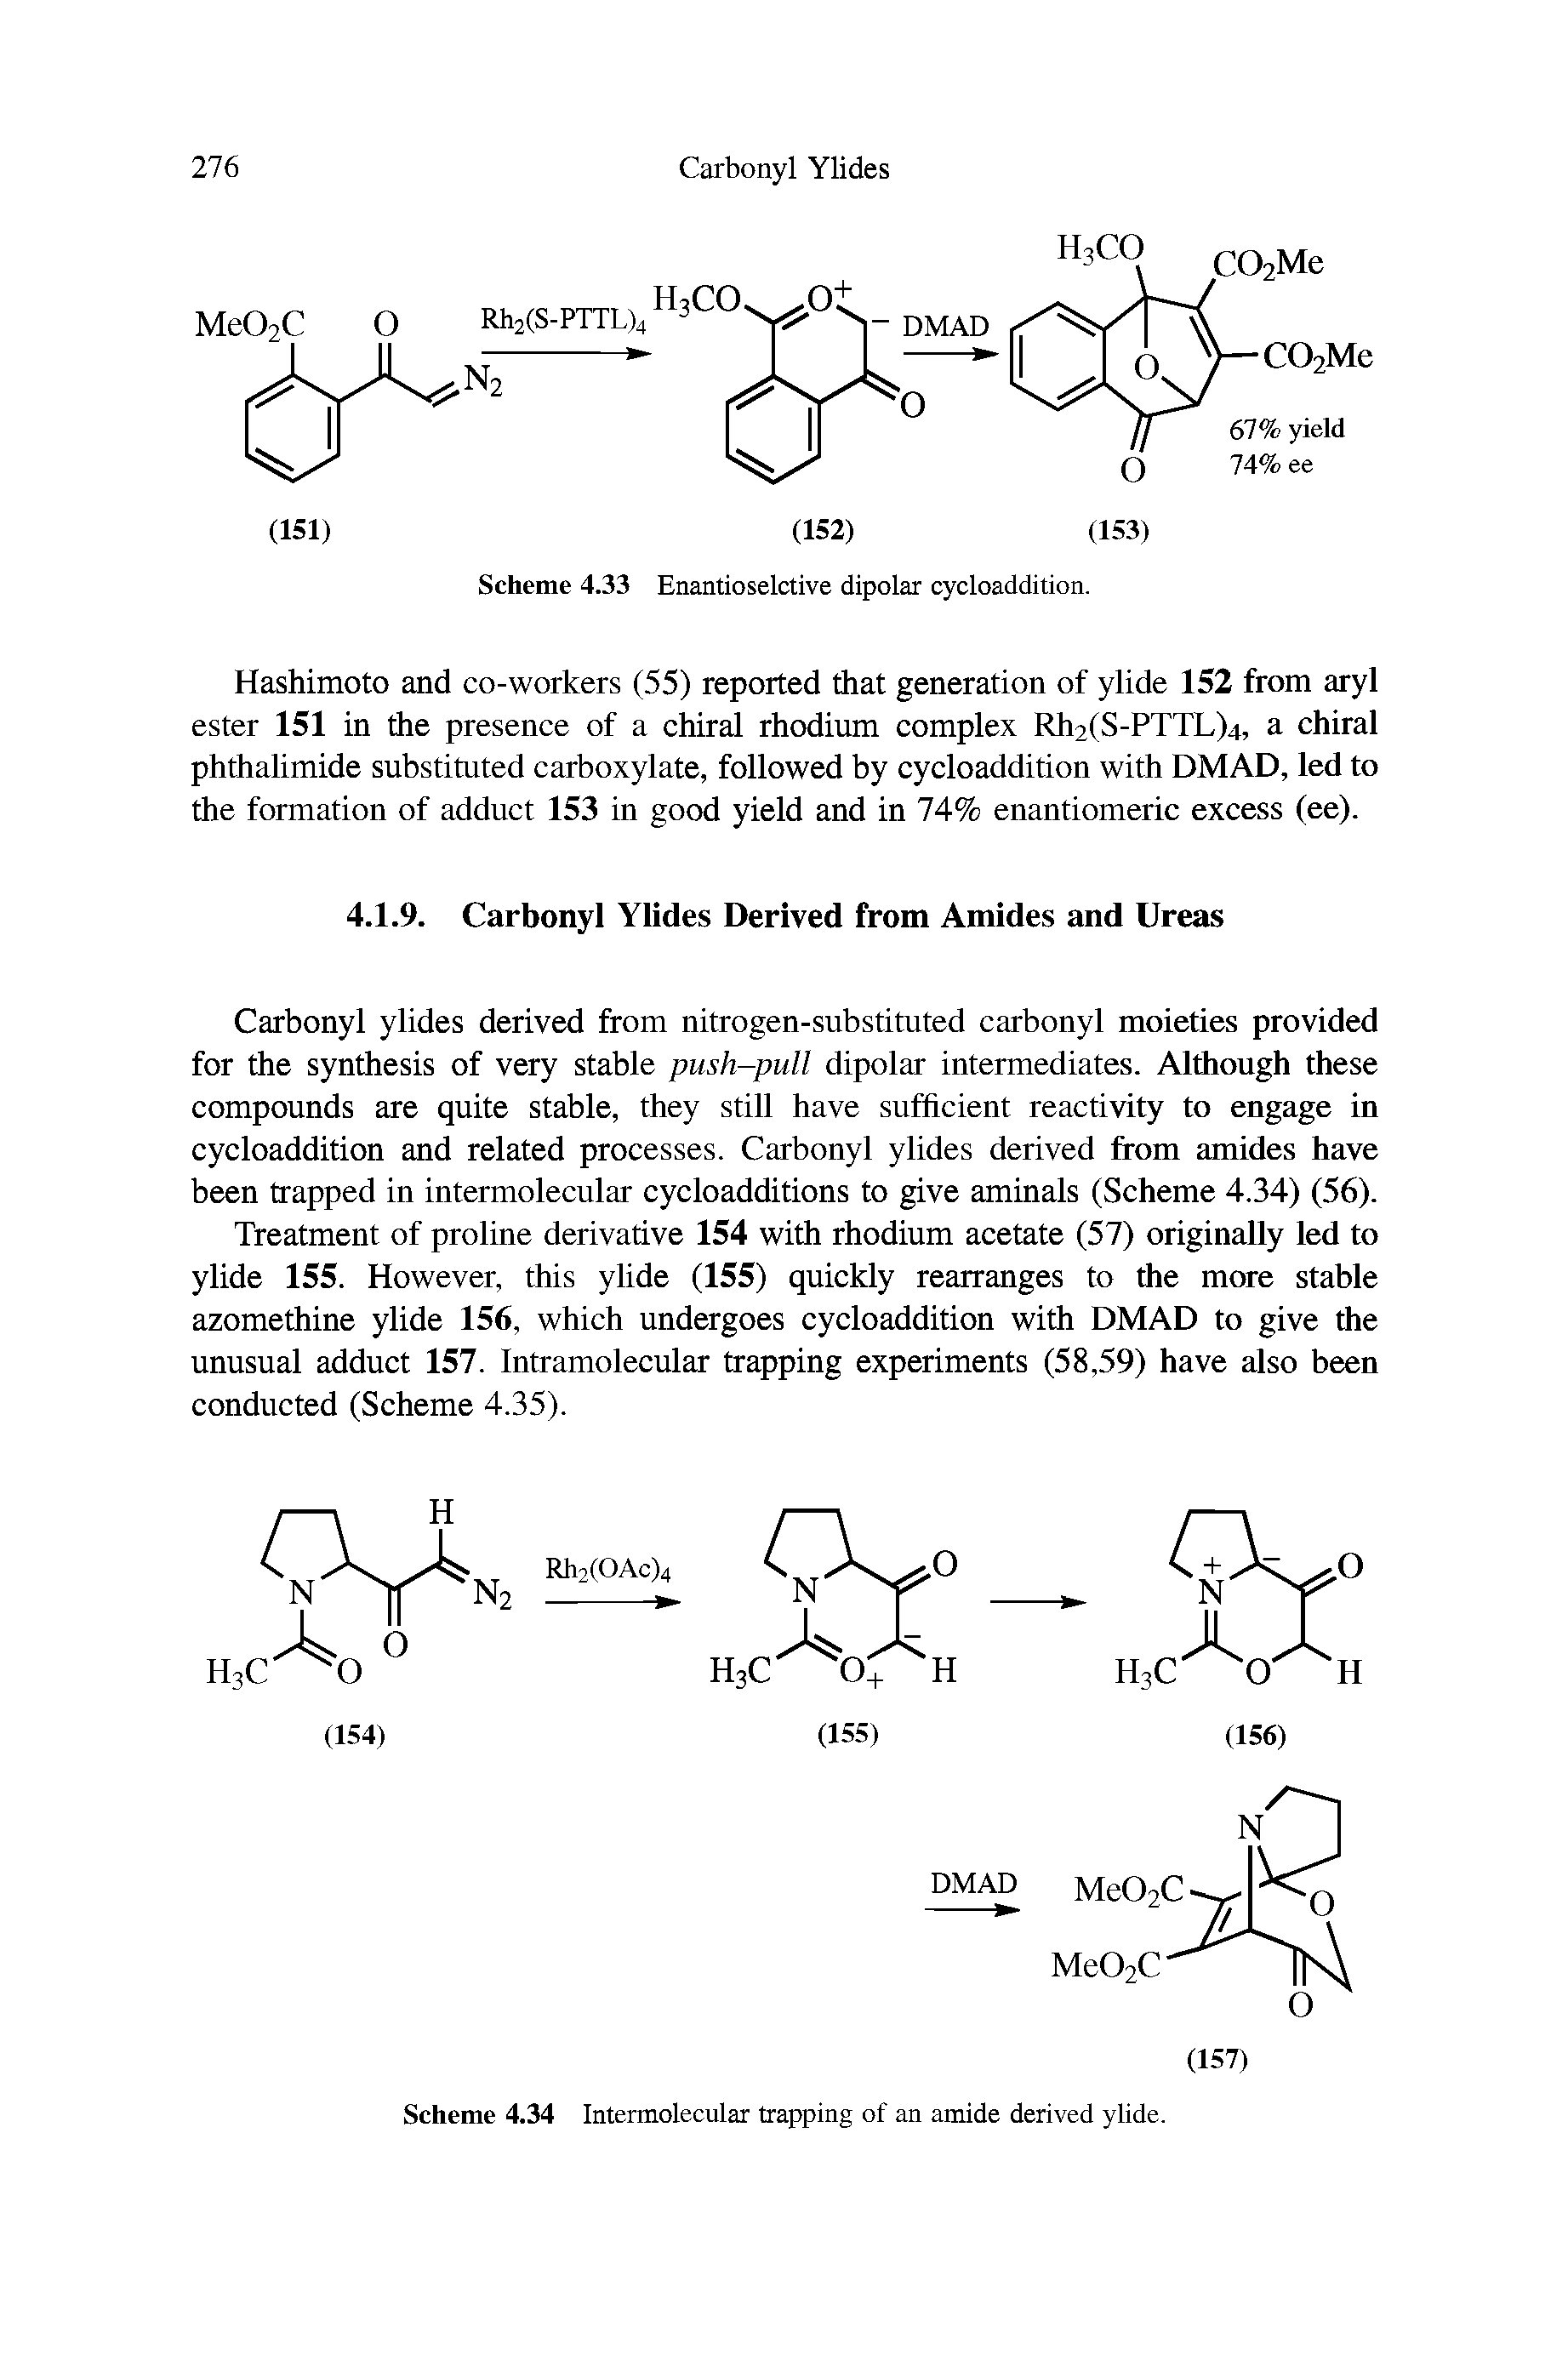 Scheme 4.34 Intermolecular trapping of an amide derived ylide.